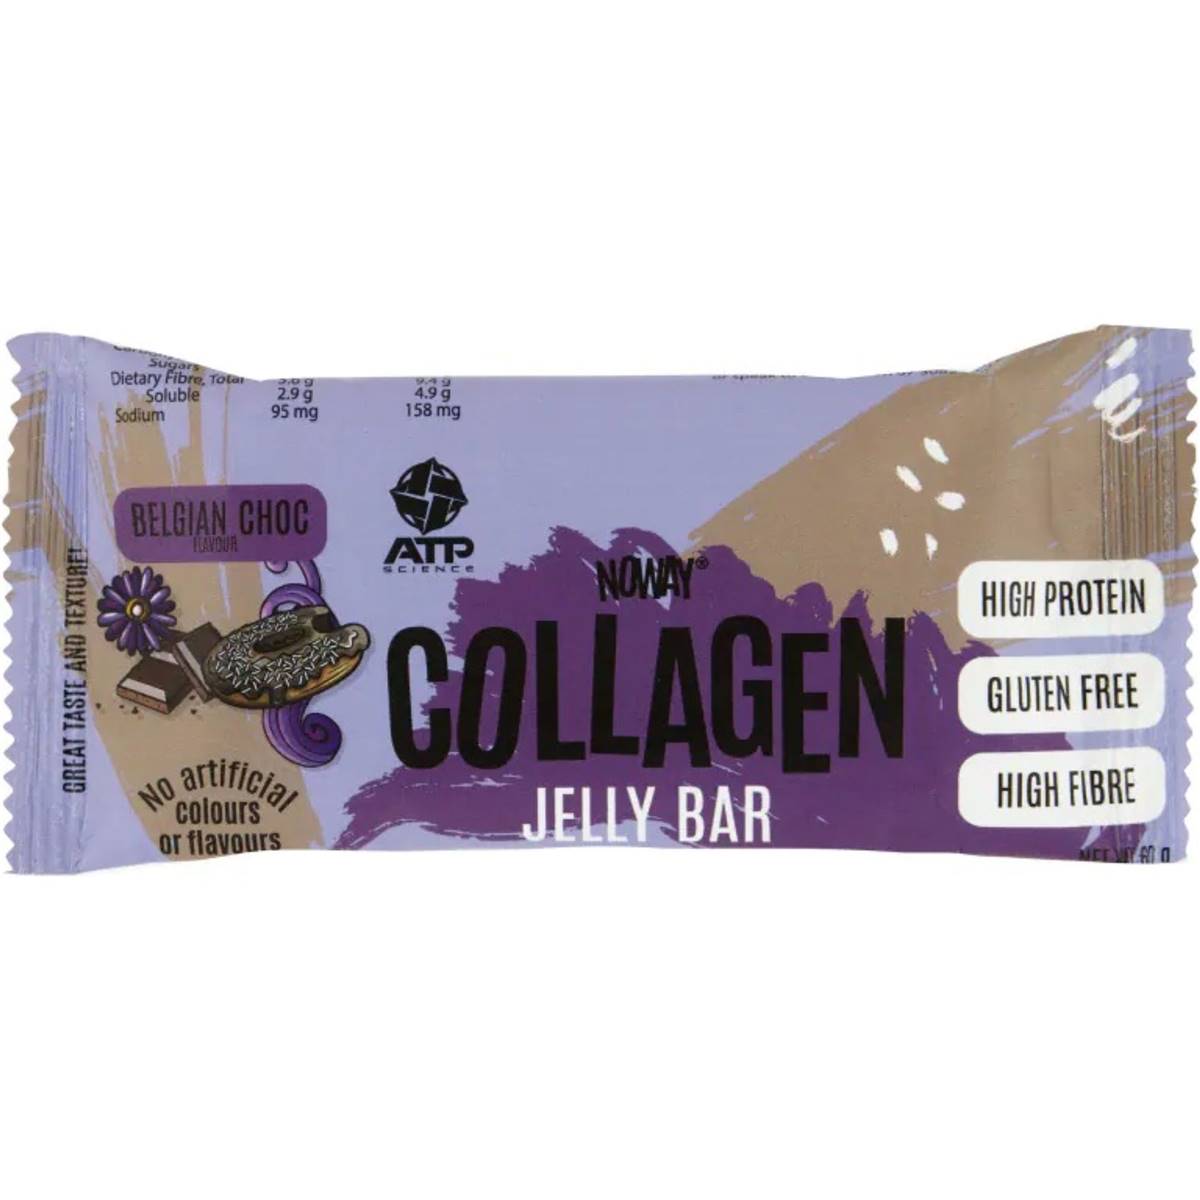 Calories in No Way Noway Collagen Jelly Bar Belgian Choc